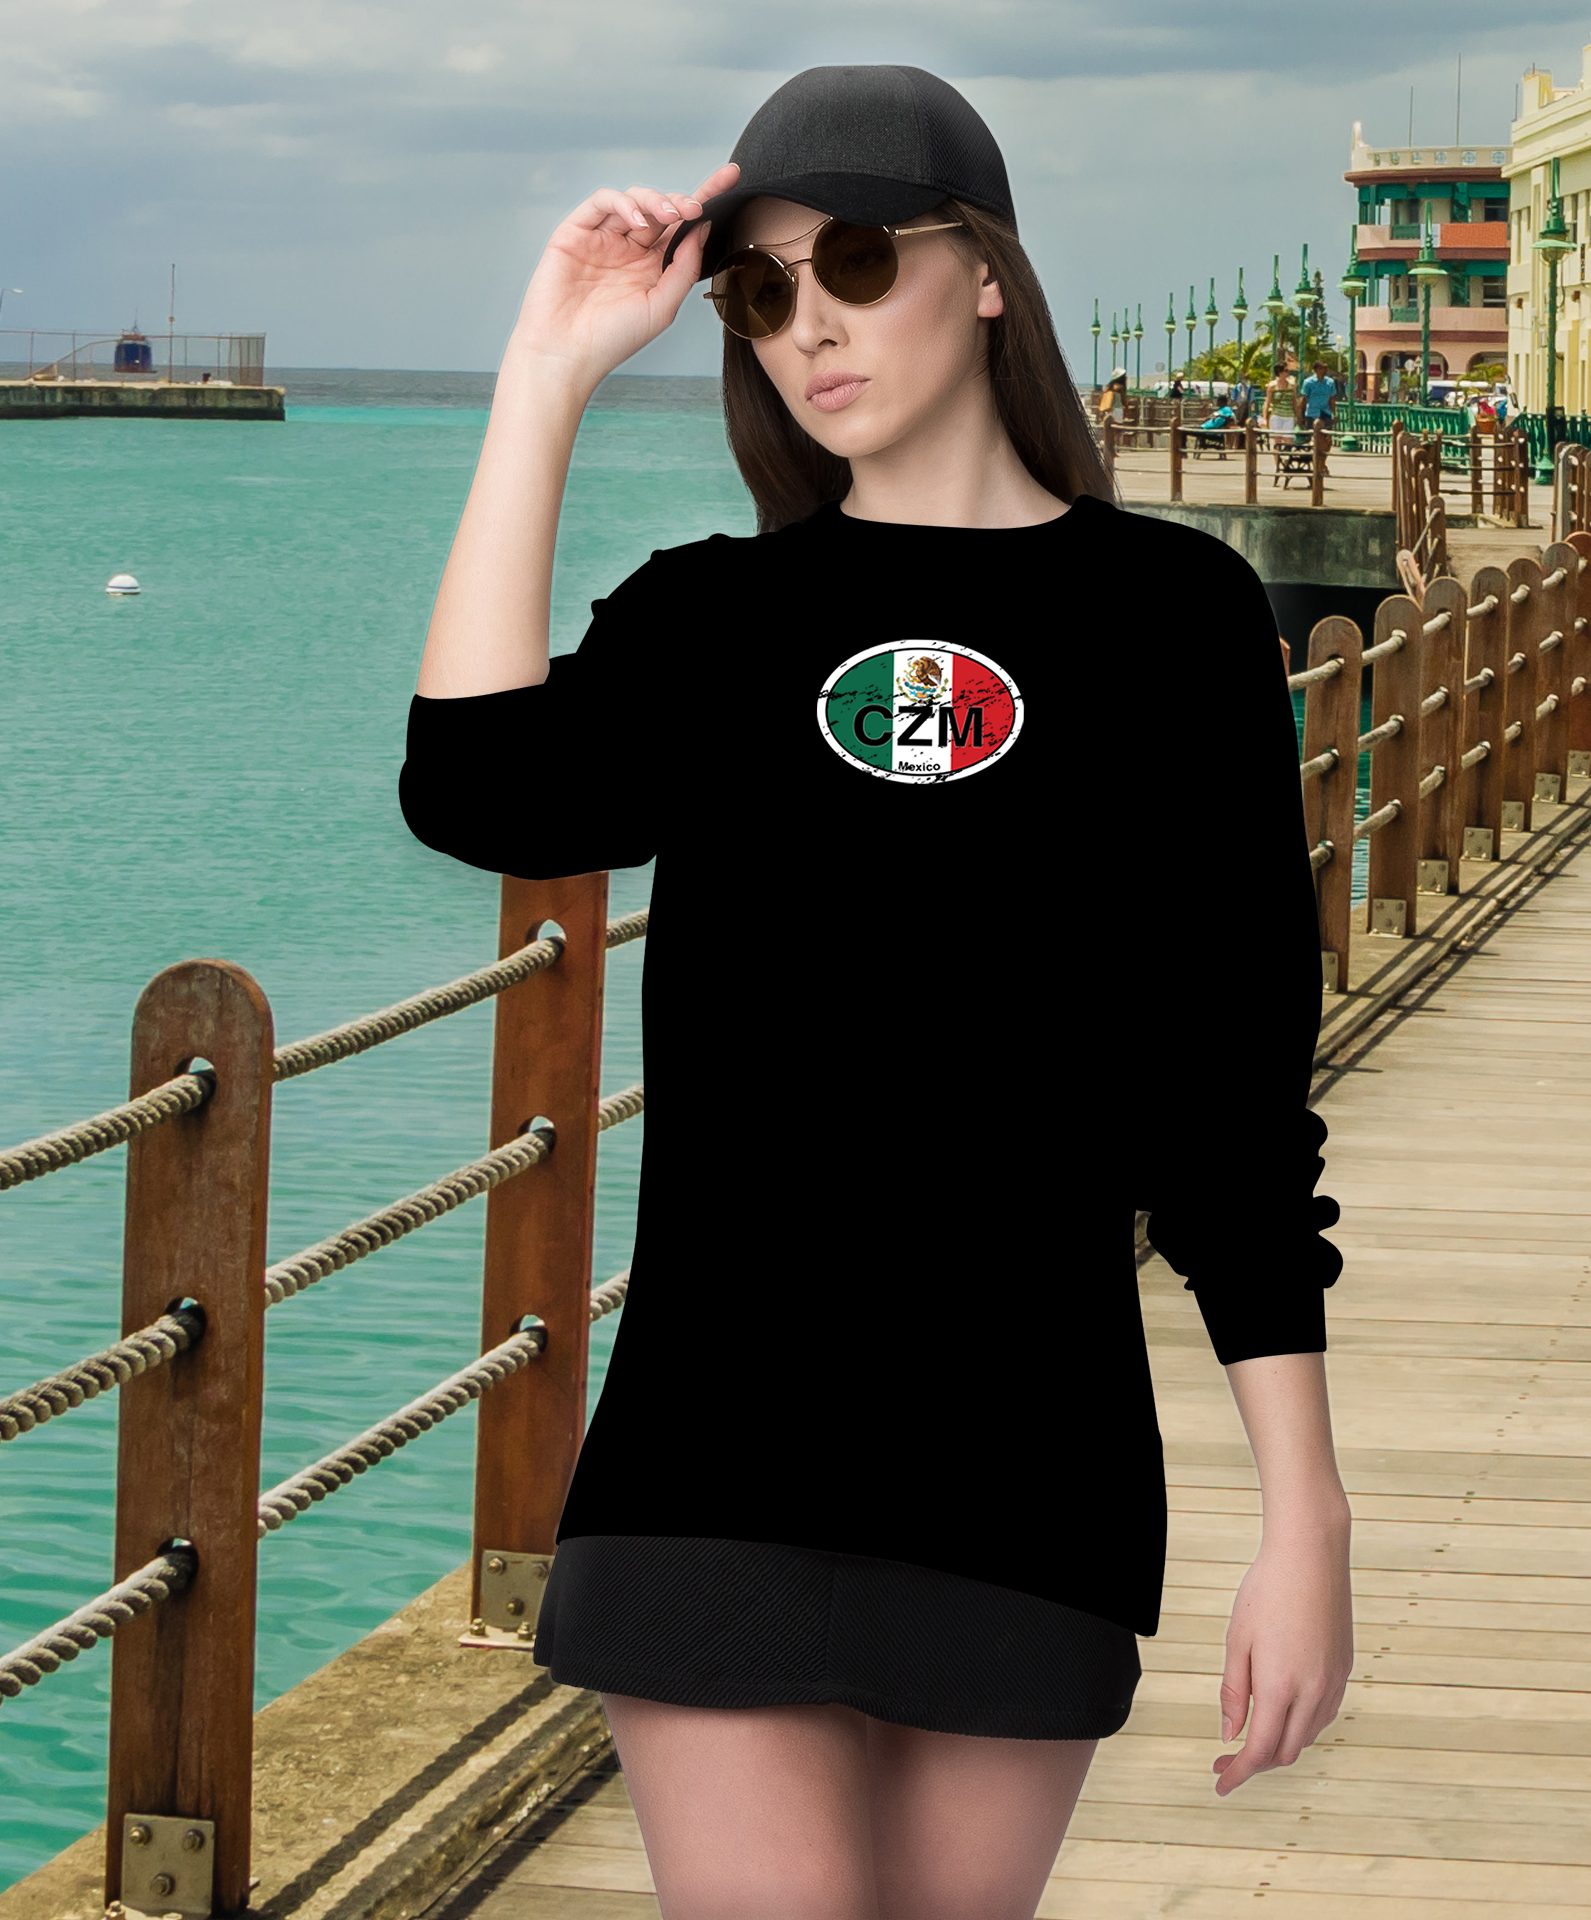 Cozumel Women's Flag Long Sleeve T-Shirts - My Destination Location